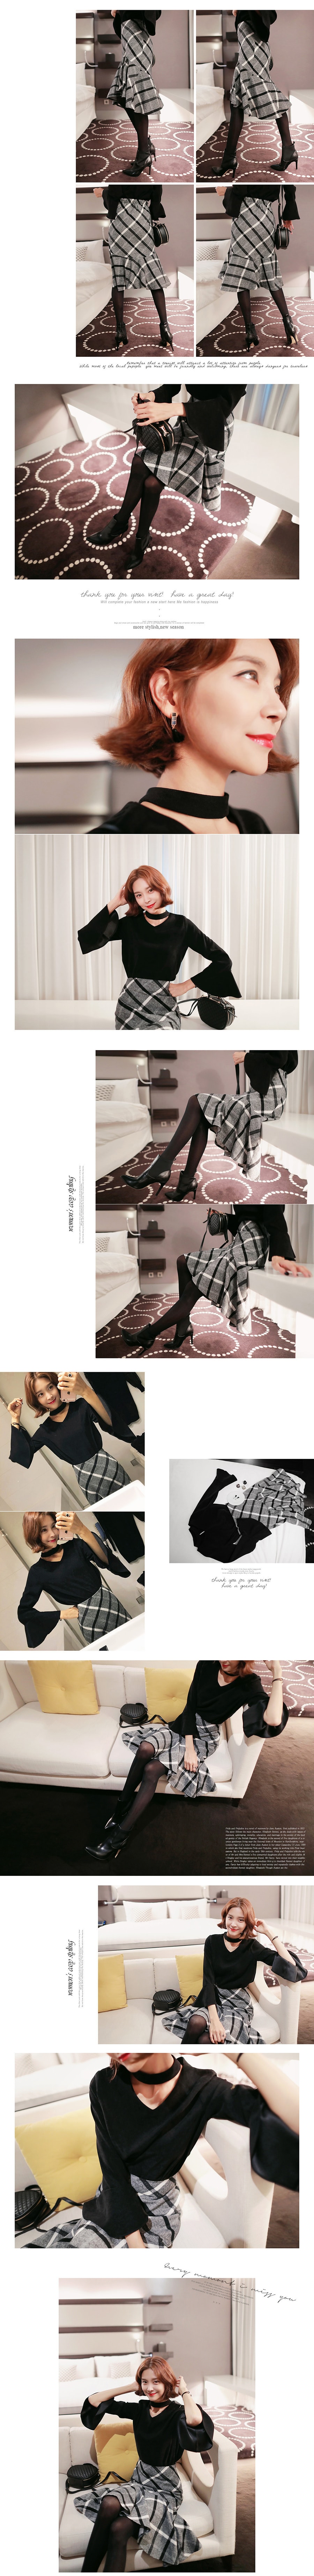 [Limited Quantity Sale] Plaid Pencil Midi Skirt Black One Size(S-M)